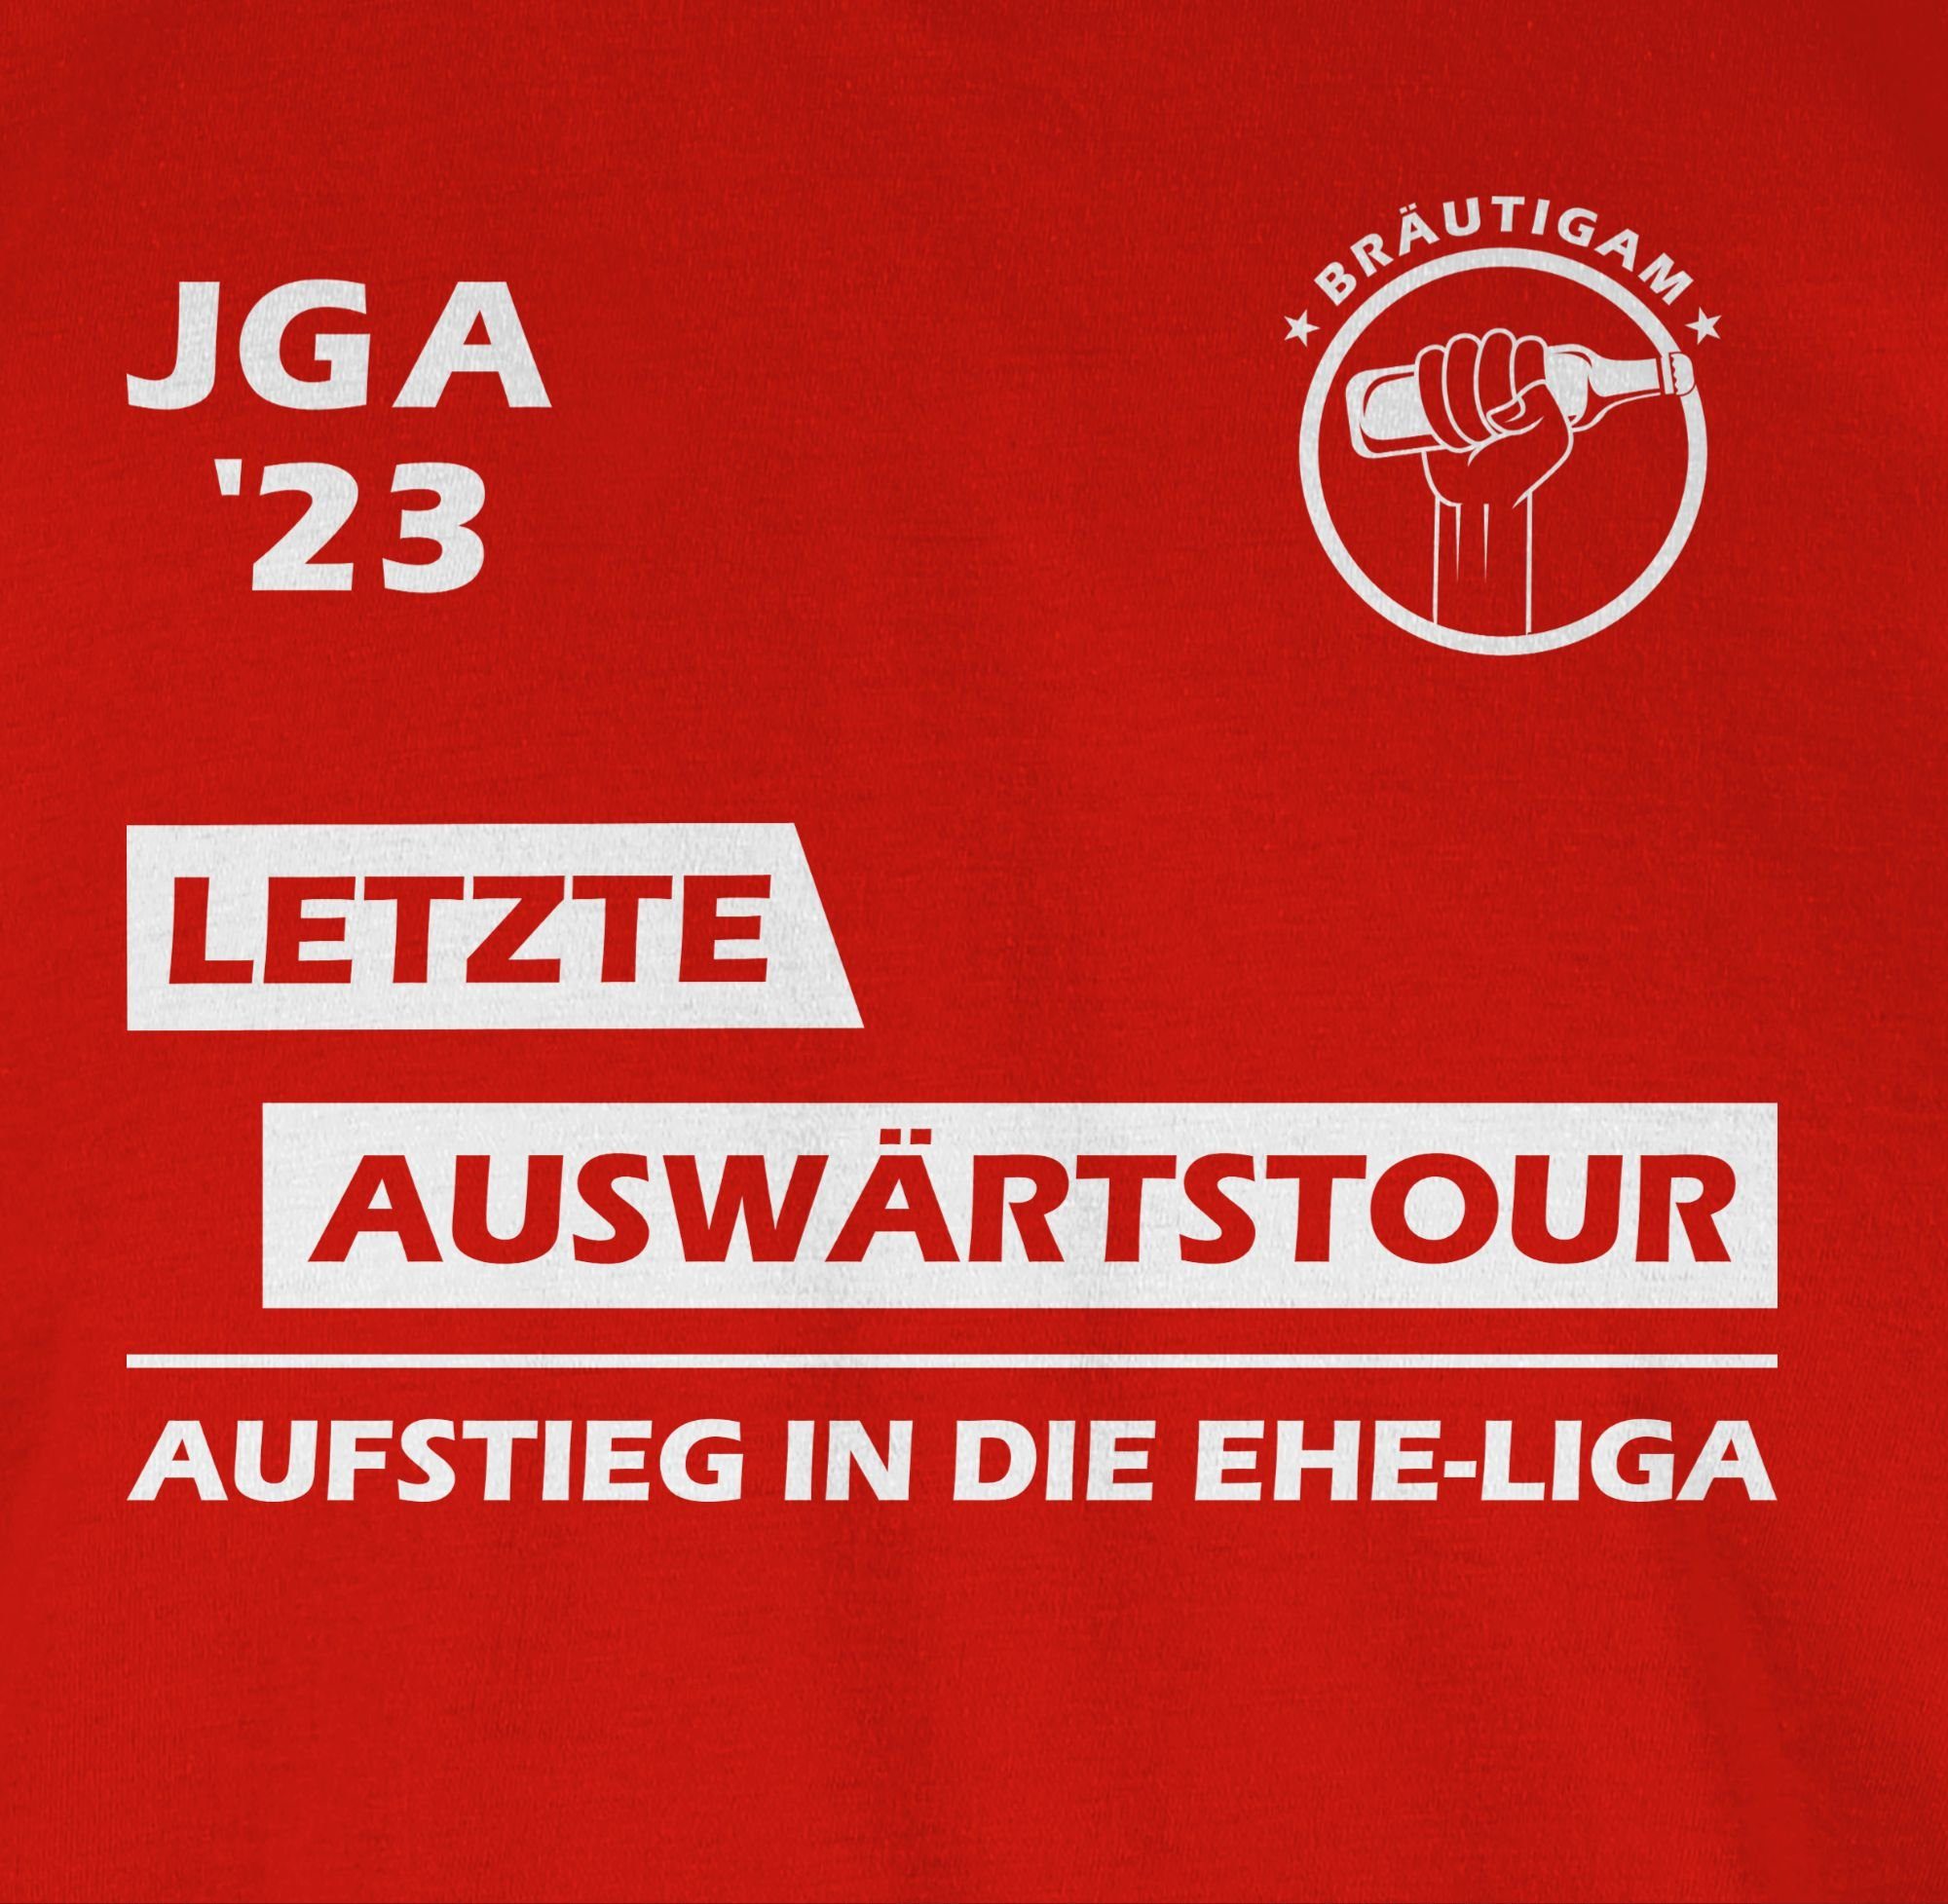 - JGA Auswärtstour I Männer Shirtracer Team T-Shirt Rot JGA Letzte 02 Bräutigam 2023